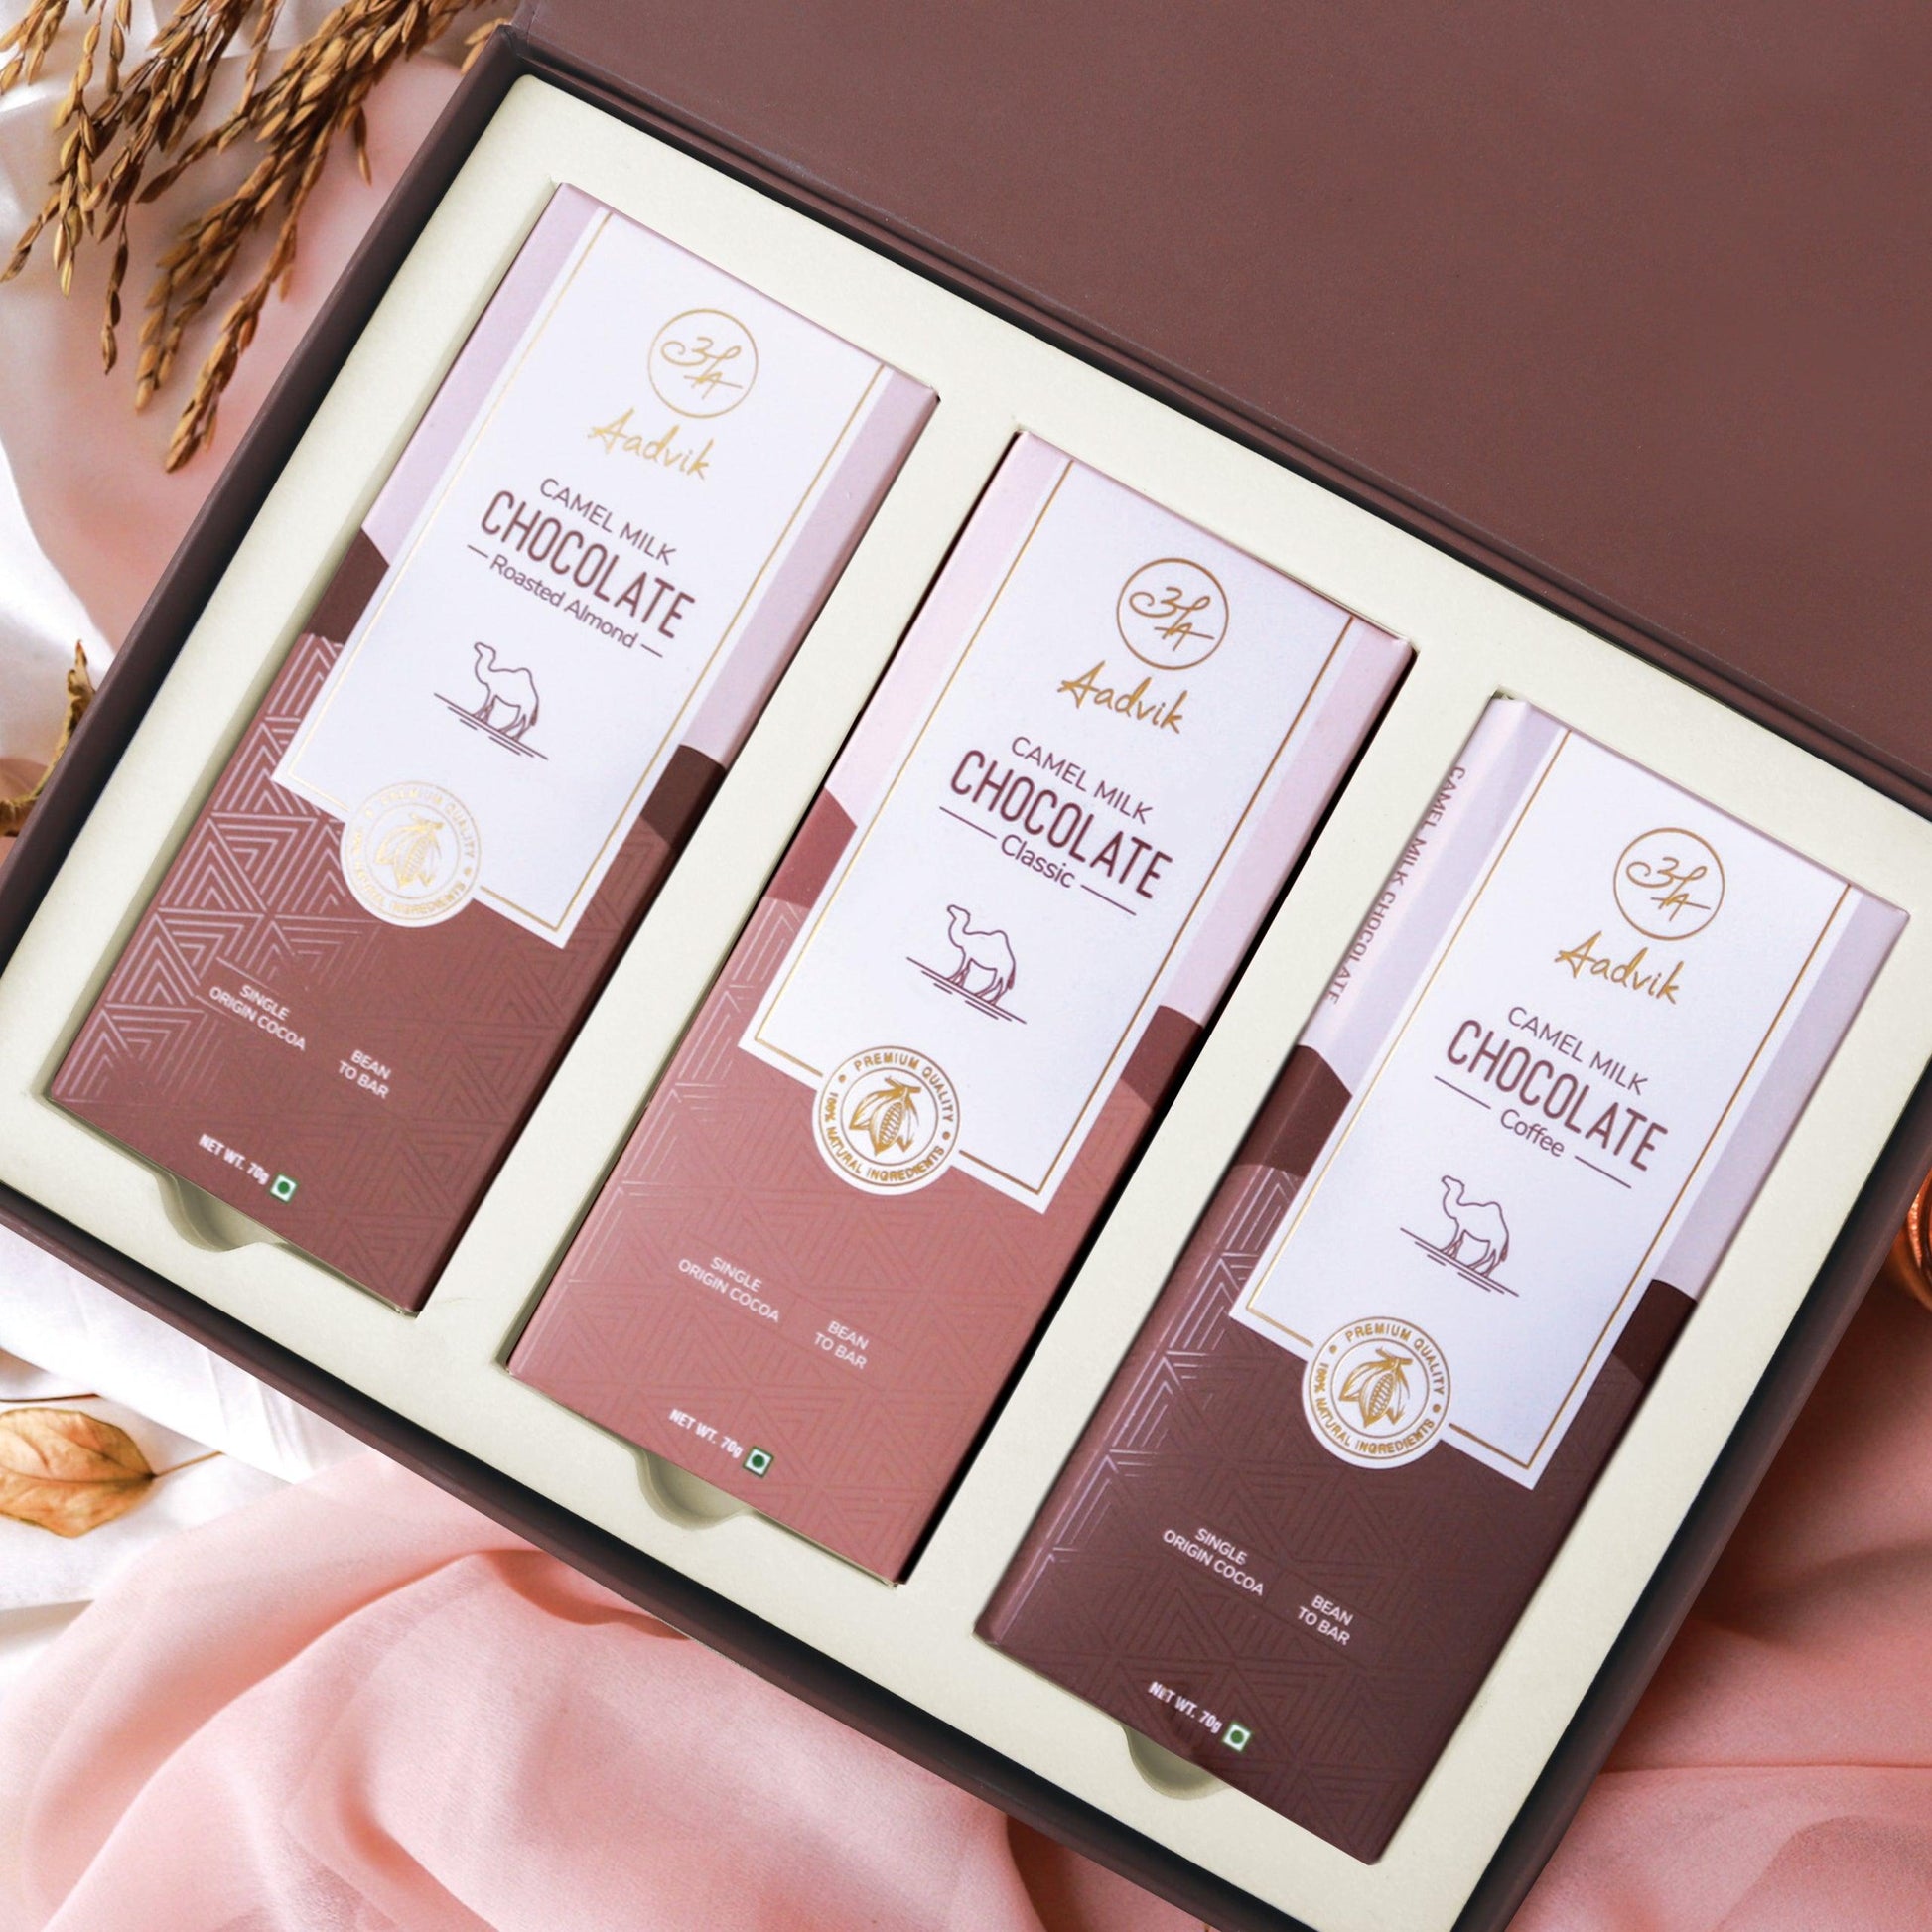 Camel Milk Chocolate | Gift Box | A Shark Tank Product | 210g - Aadvik Foods